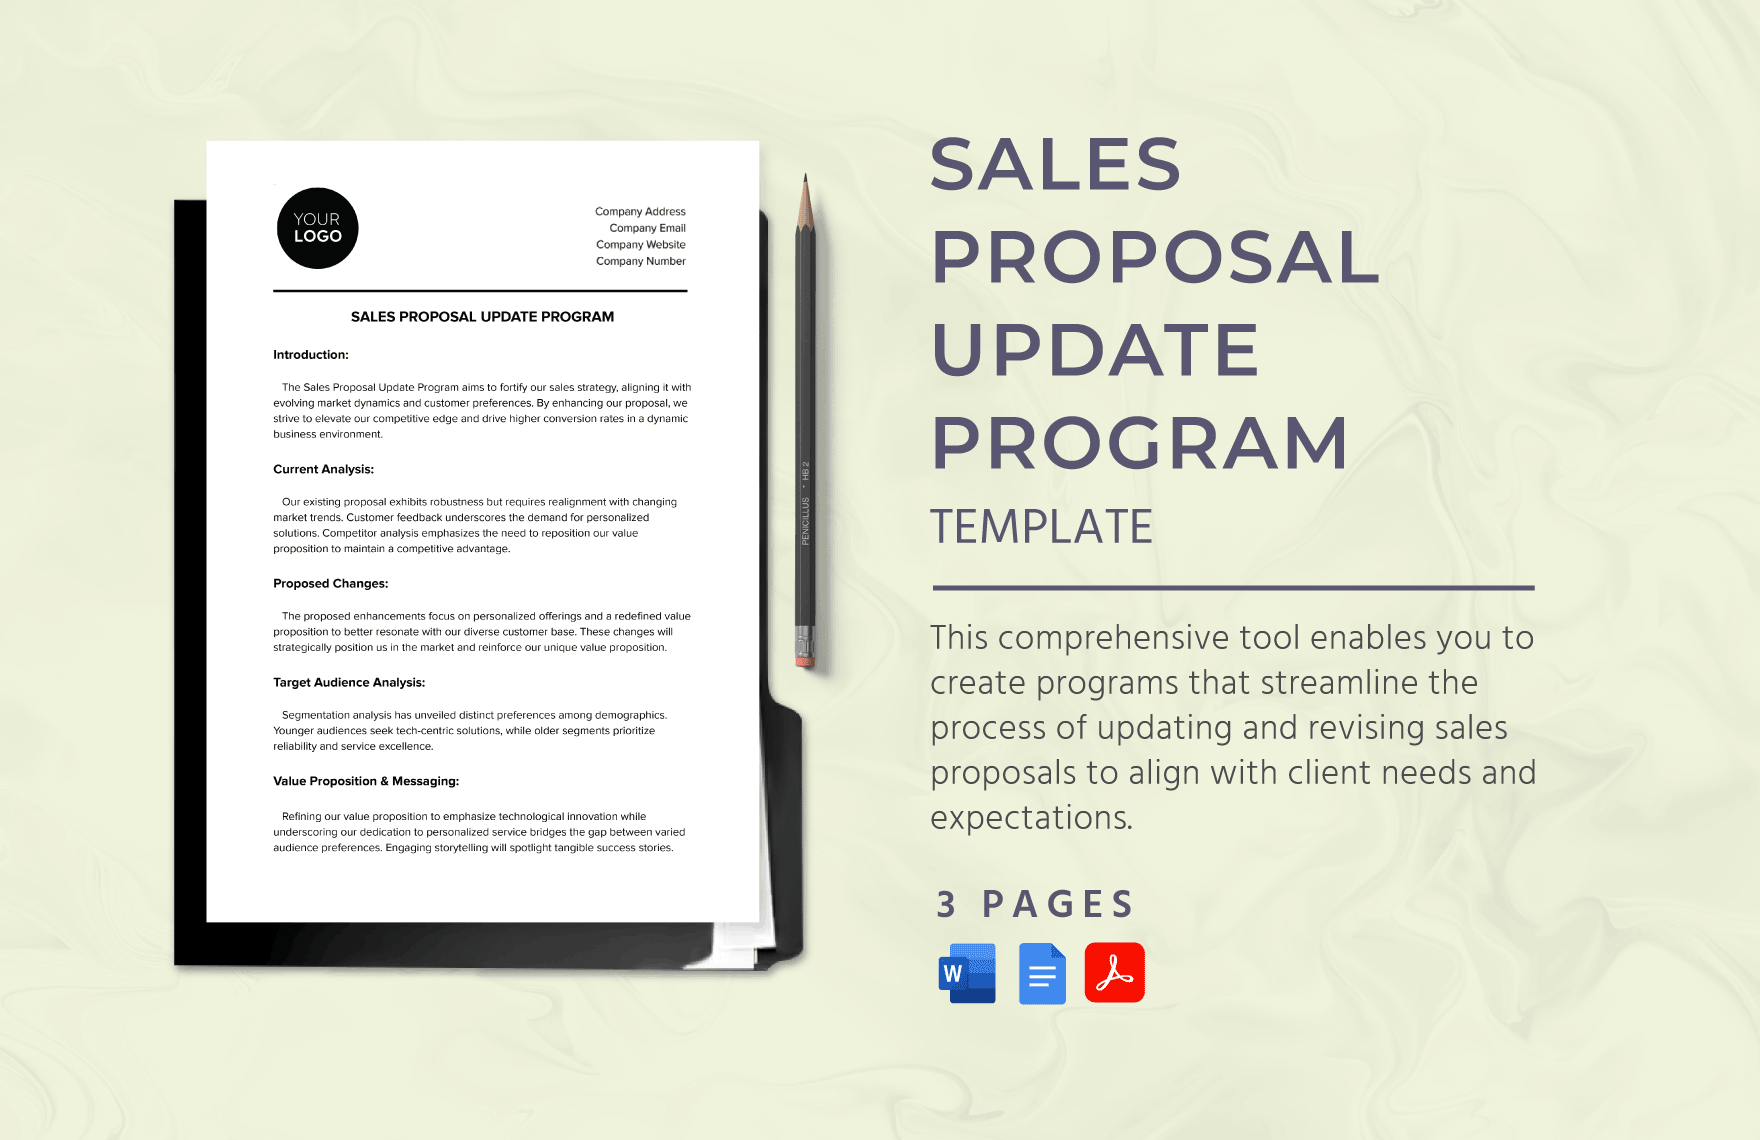 Sales Proposal Update Program Template in Word, Google Docs, PDF